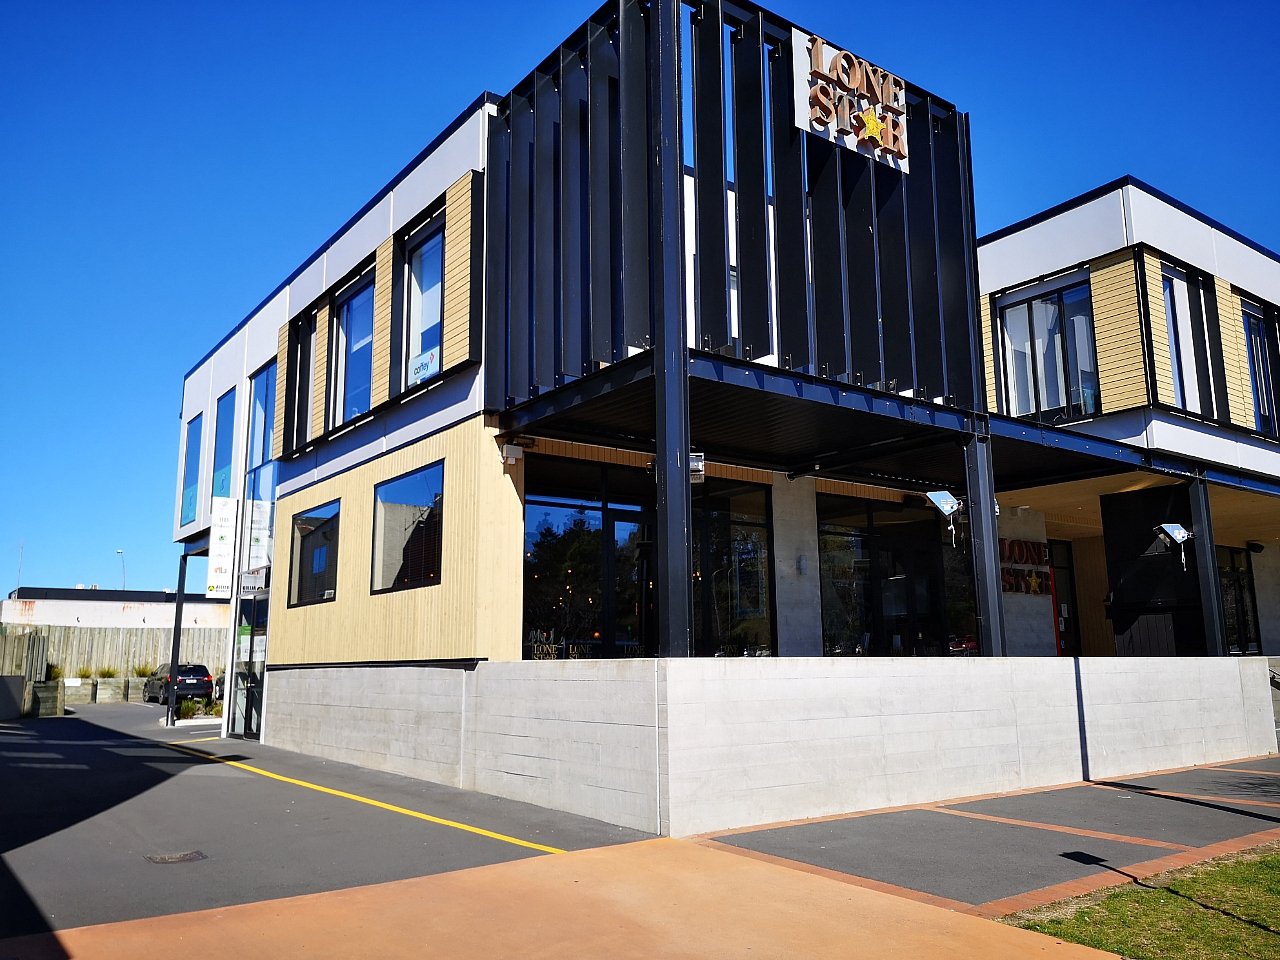 Lone Star Cafe and Bar Rotorua